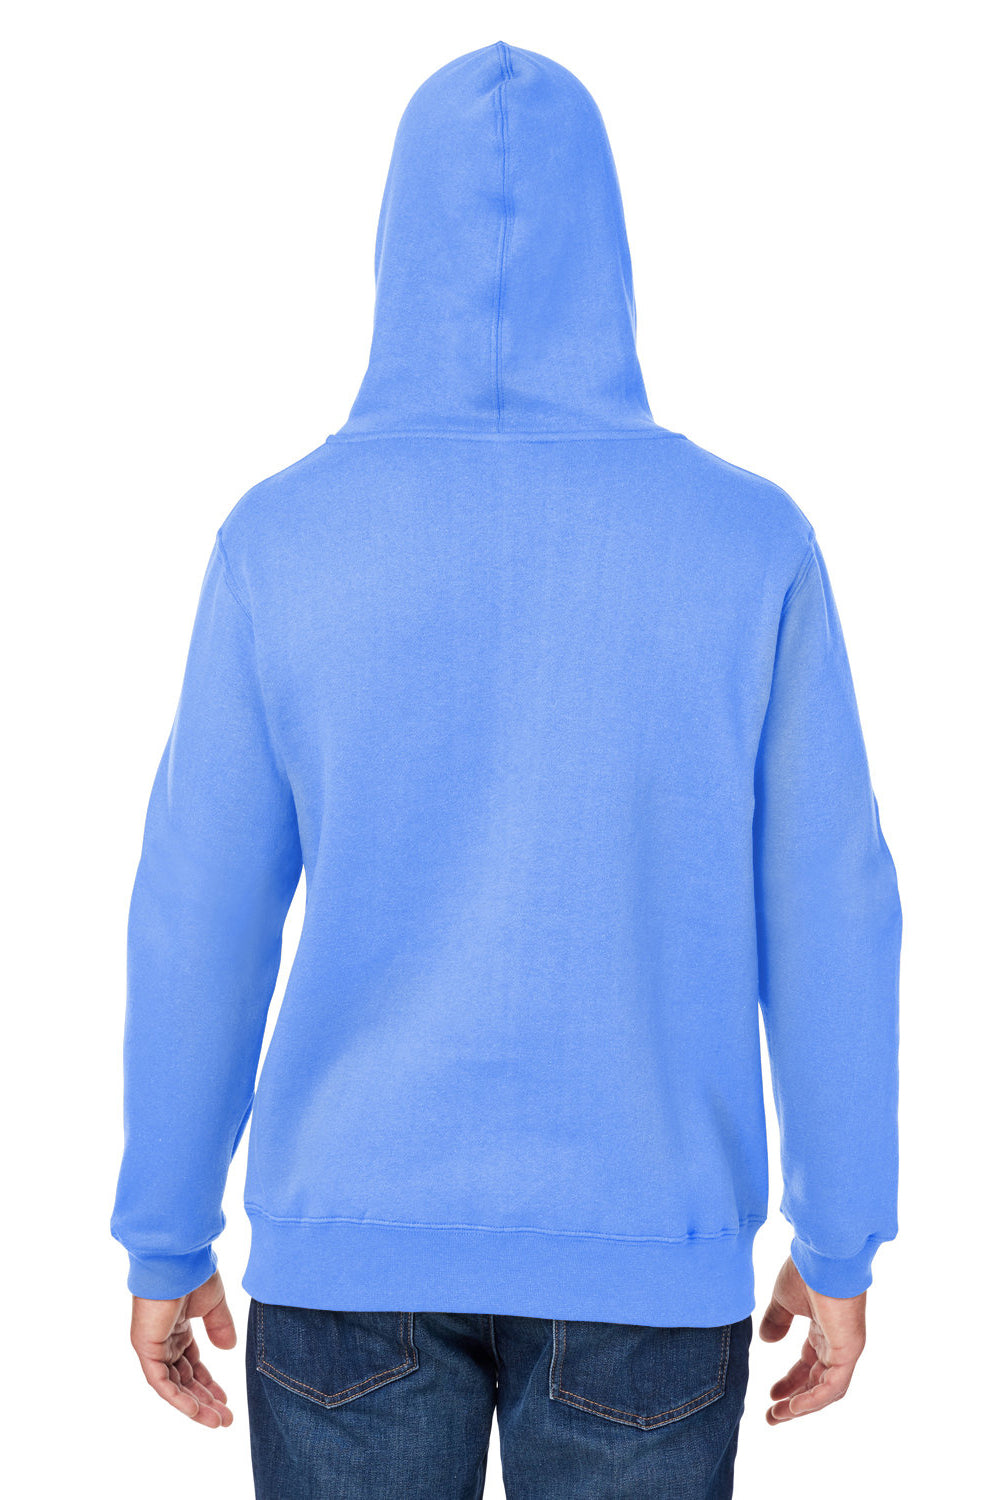 J America JA8824/8824 Mens Premium Fleece Hooded Sweatshirt Hoodie Carolina Blue Back